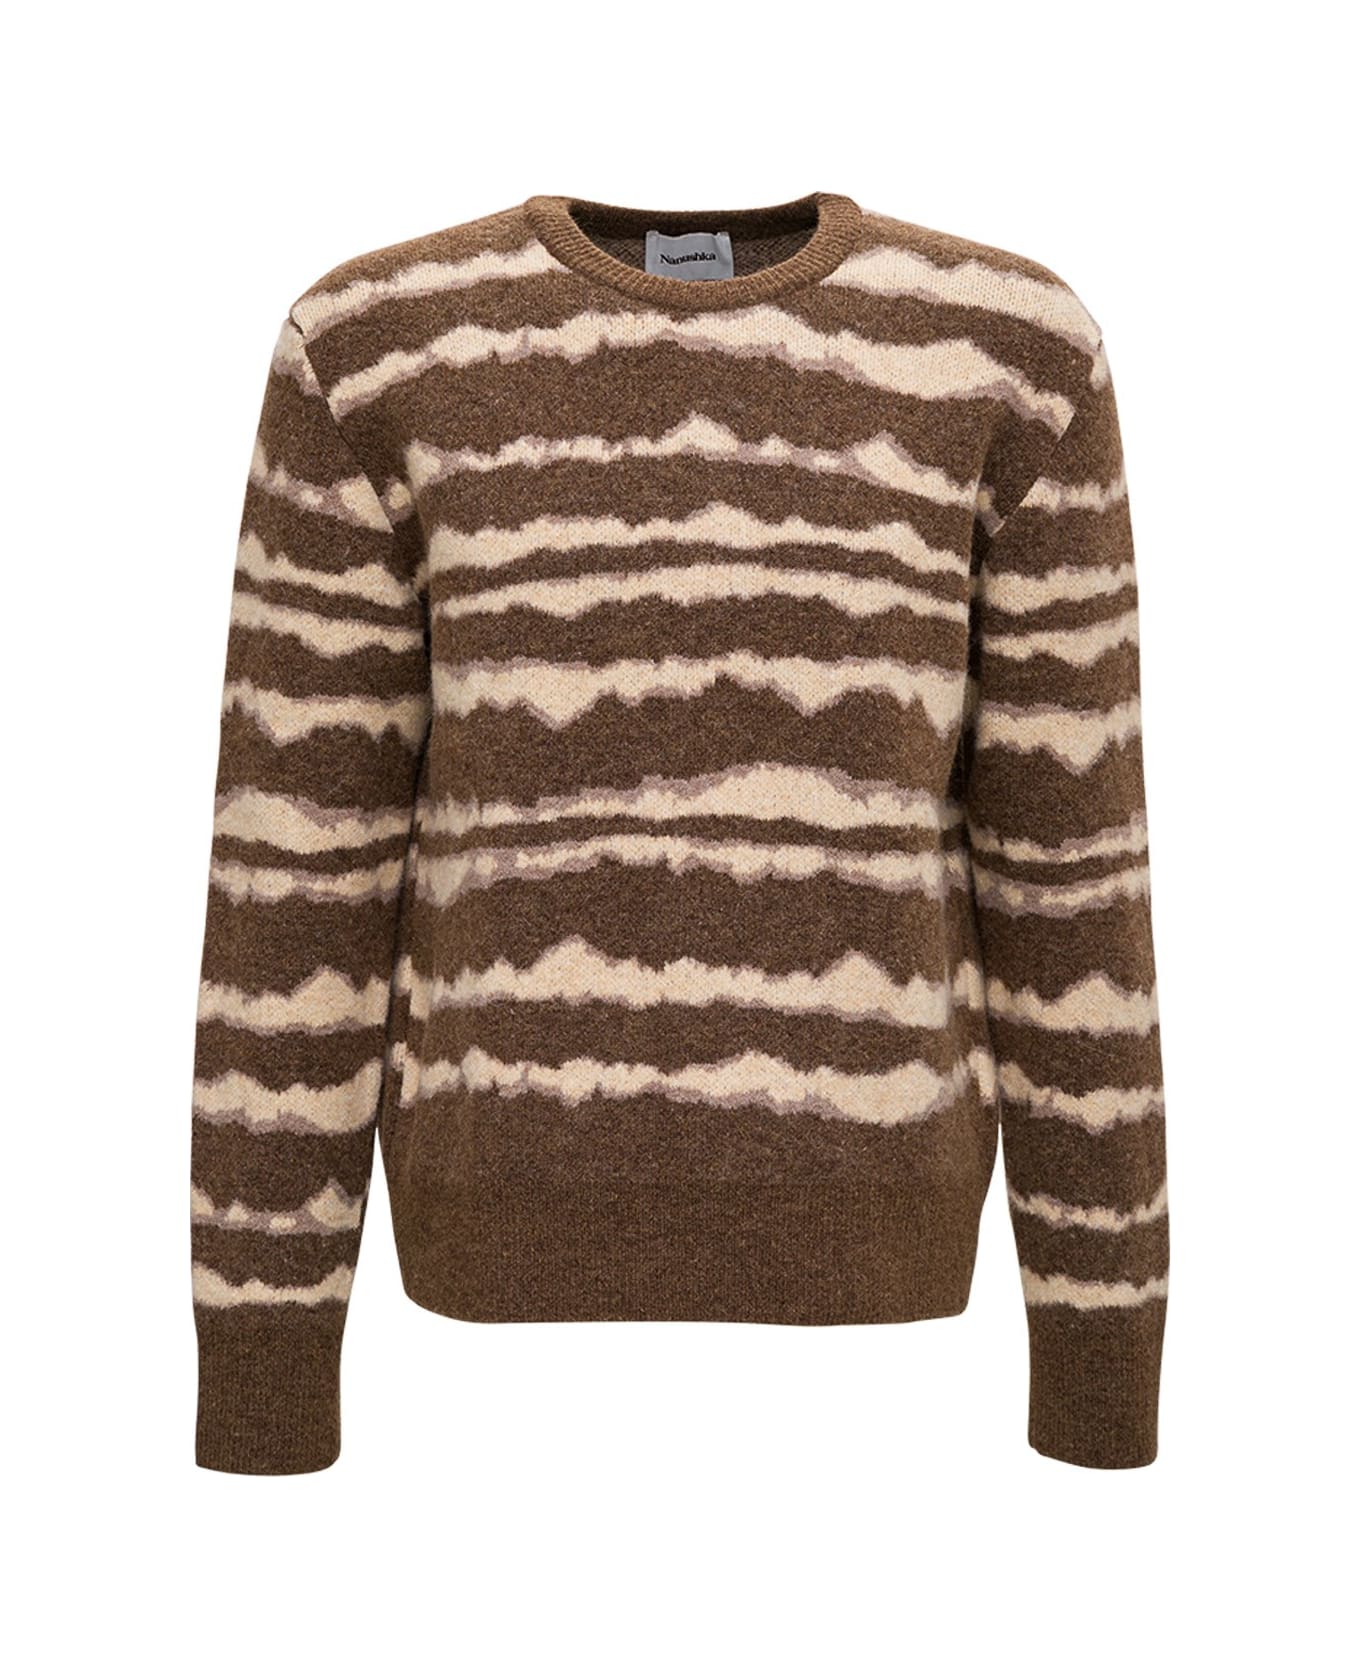 Nanushka Tie Dye Wool Blend Sweater - Brown